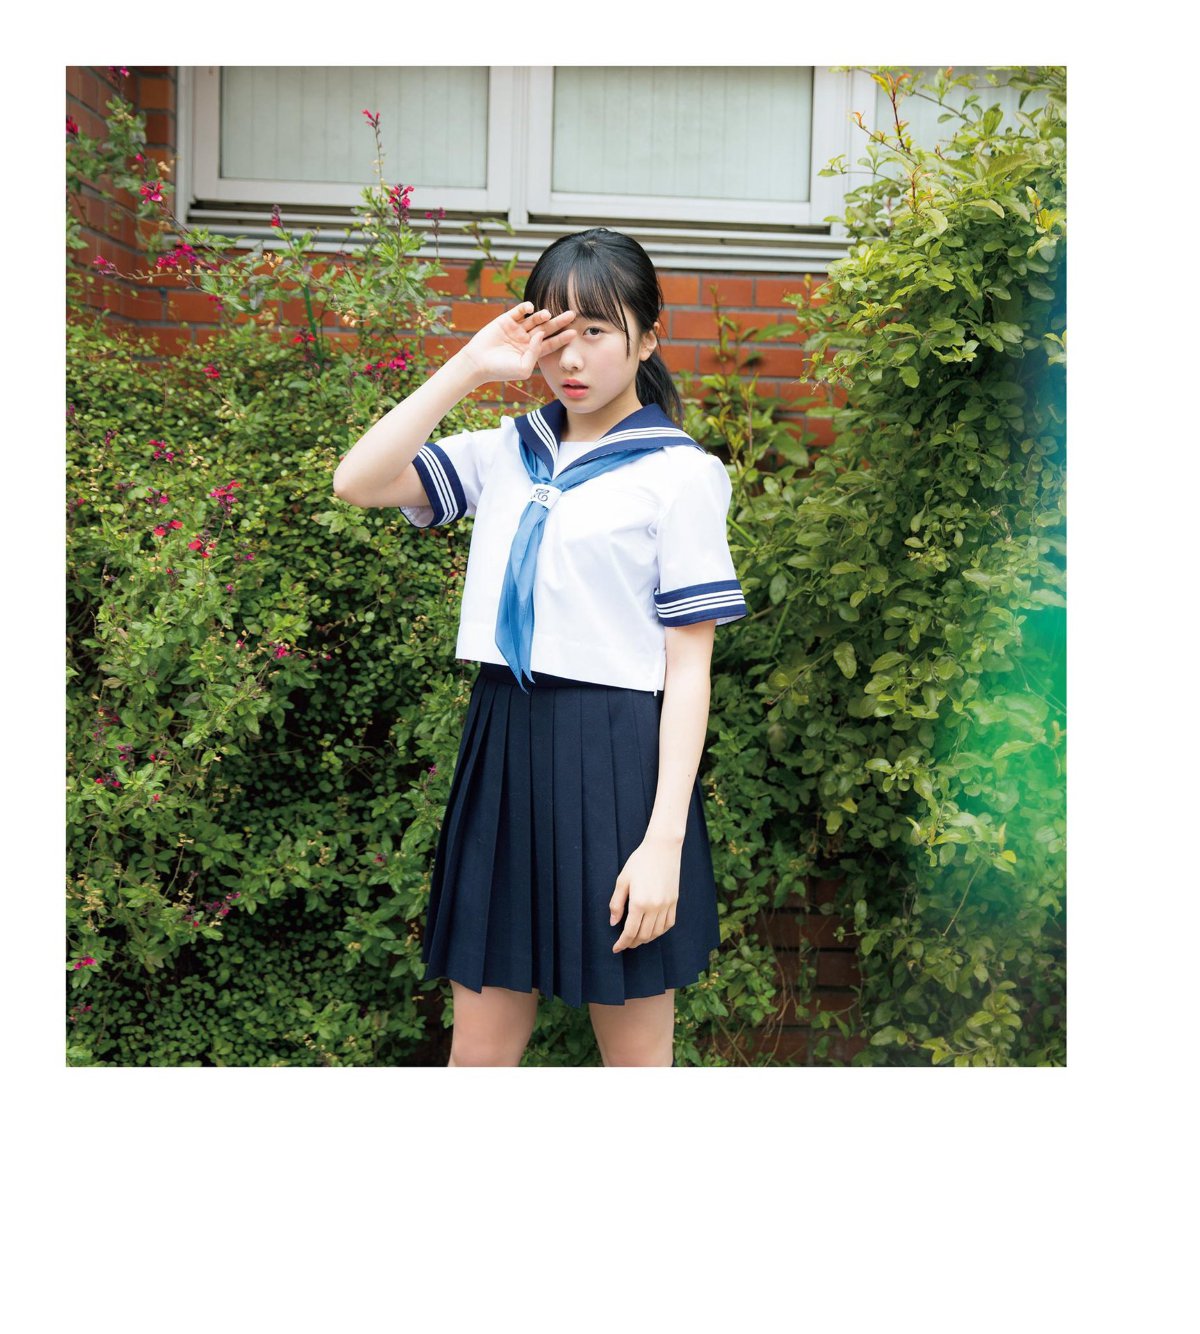 Photobook Miyu Honda 本田望結 JUNIOR HIGH SCHOOL DAYS 2020 04 30 0041 1345501570.jpg